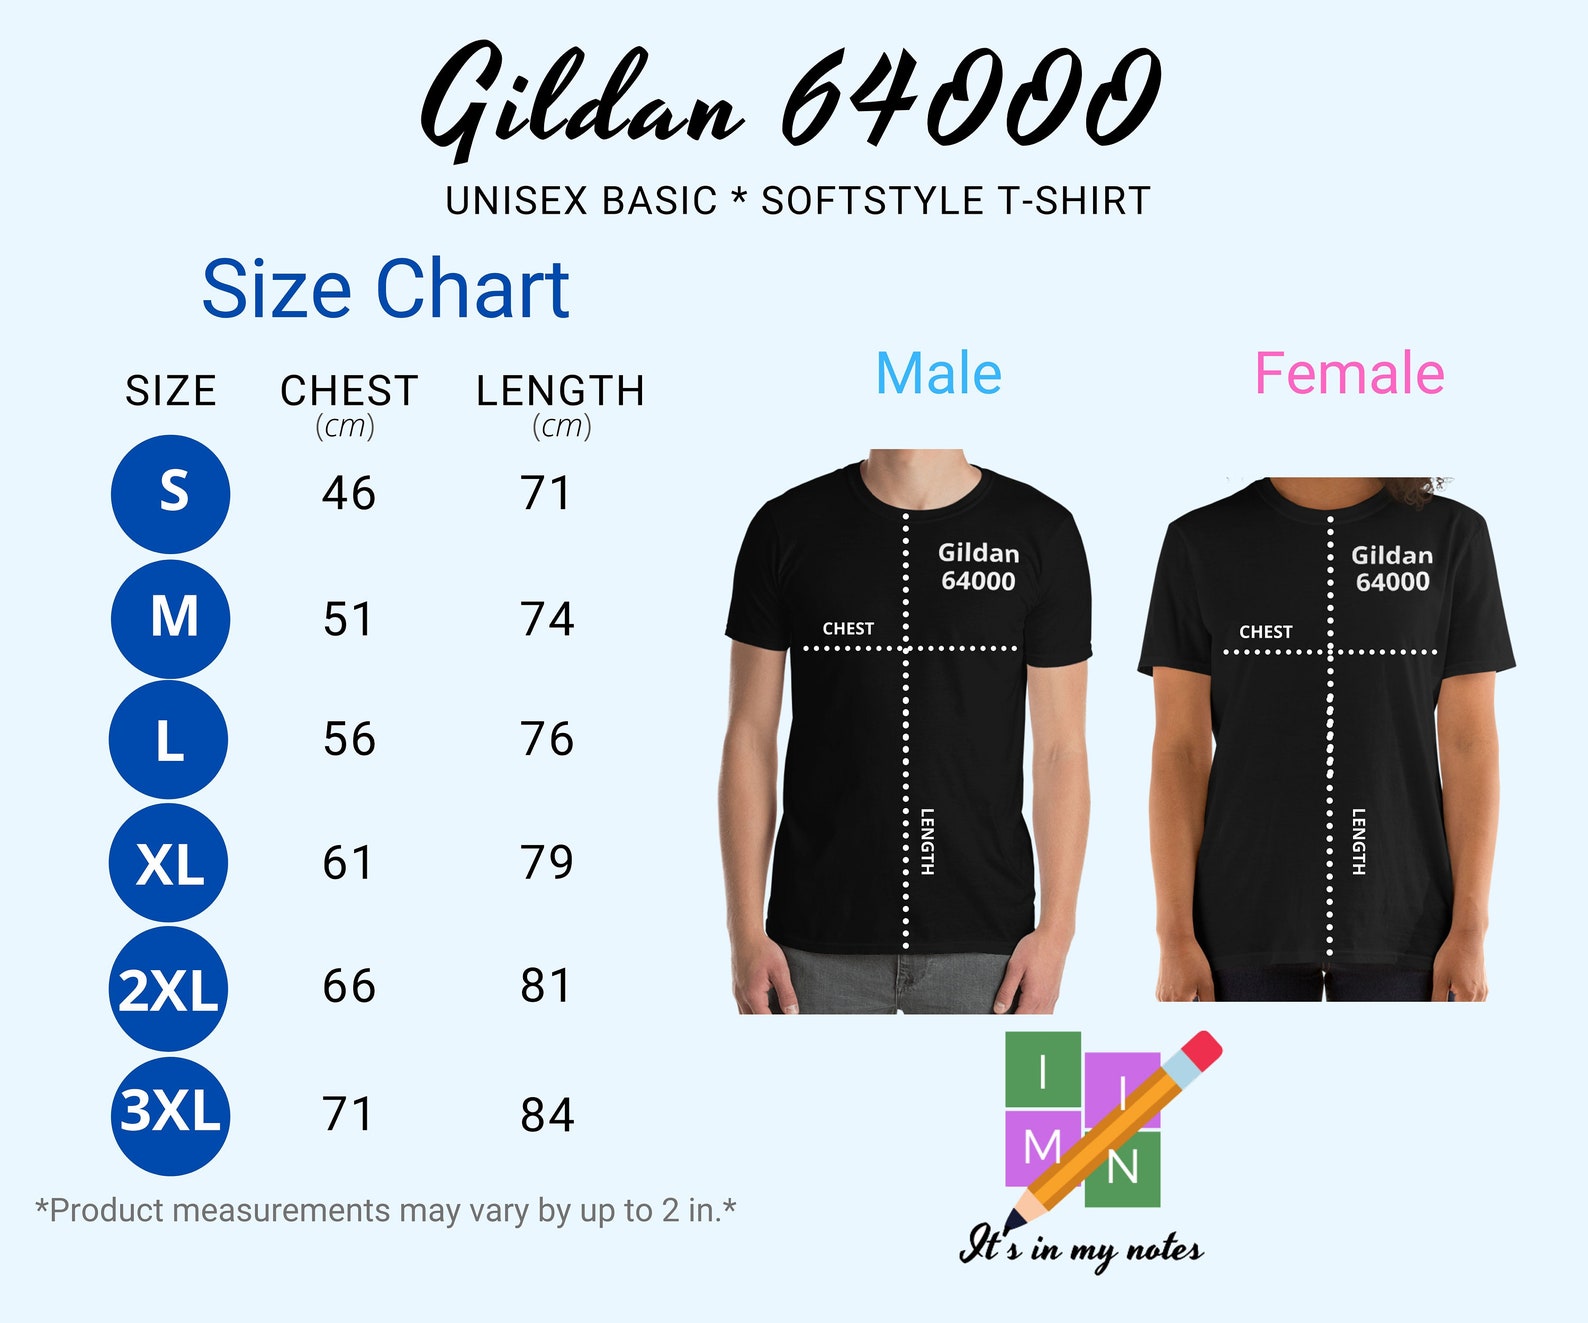 Gildan 64000 Unisex T-shirt Size Chart inches/cm, Digital Sizing Chart ...